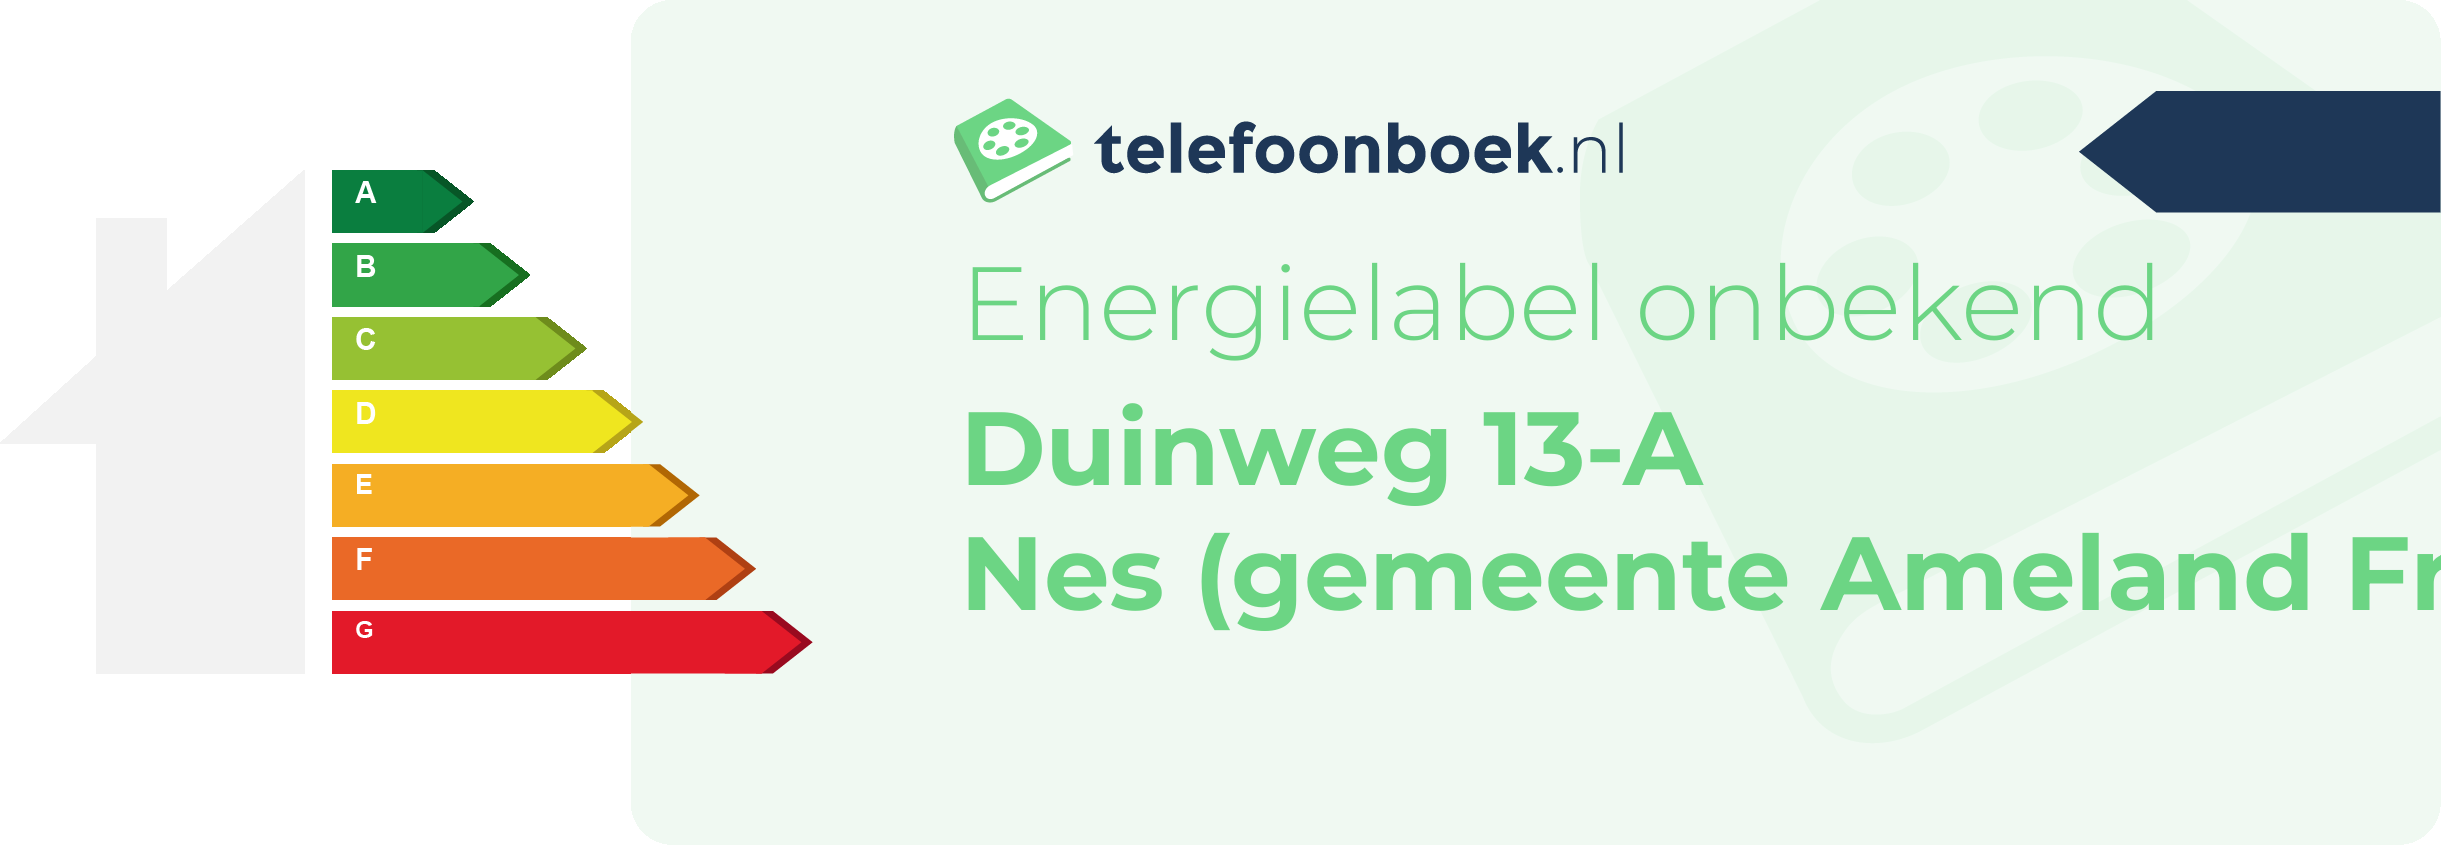 Energielabel Duinweg 13-A Nes (gemeente Ameland Friesland)